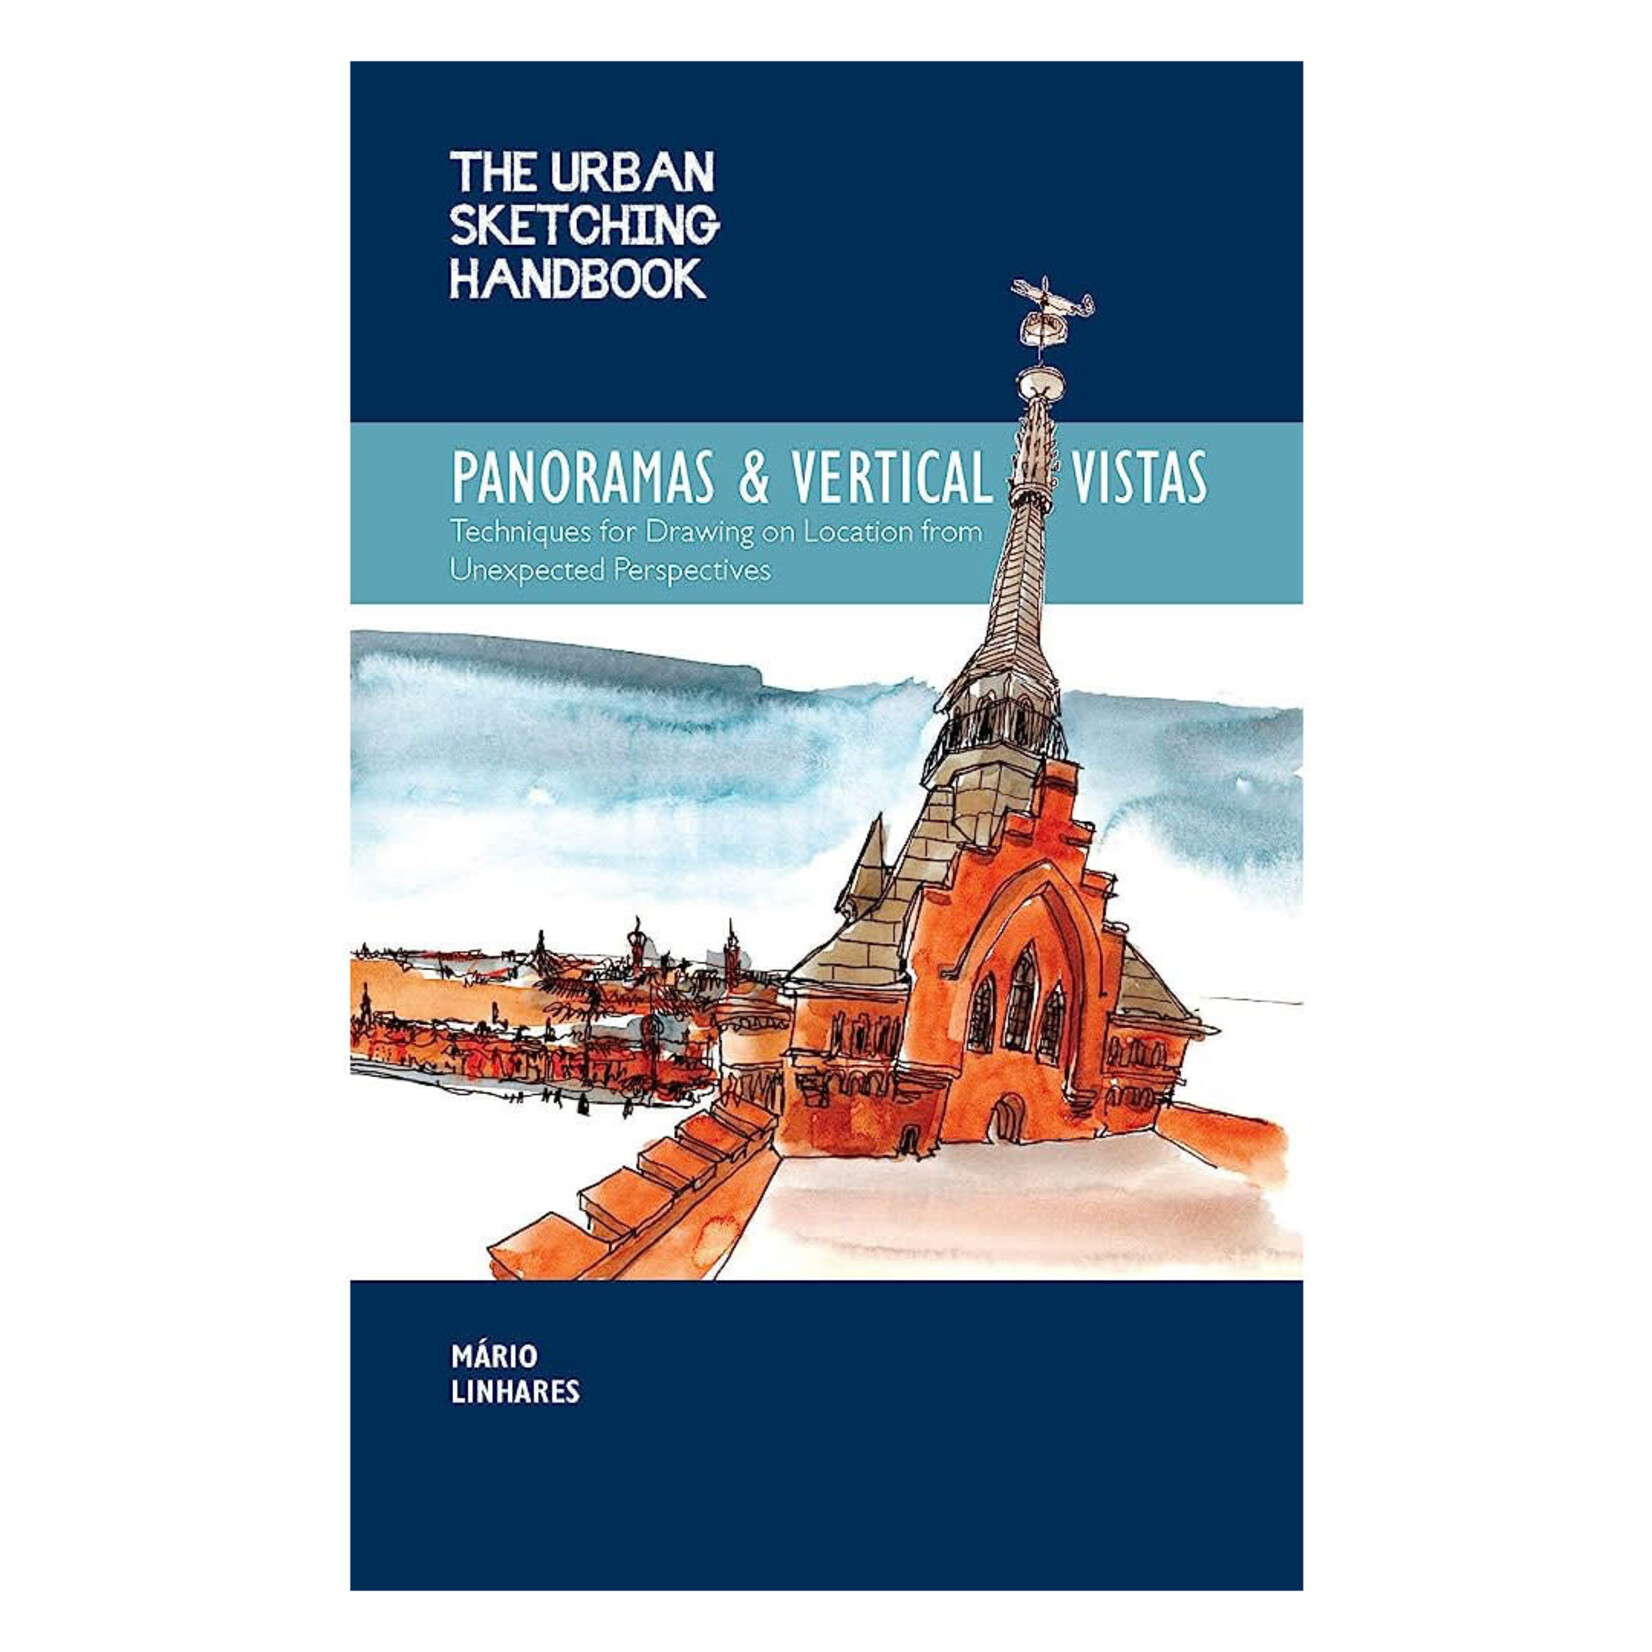 The Urban Sketching Handbook: Panoramas and Vertical Vistas